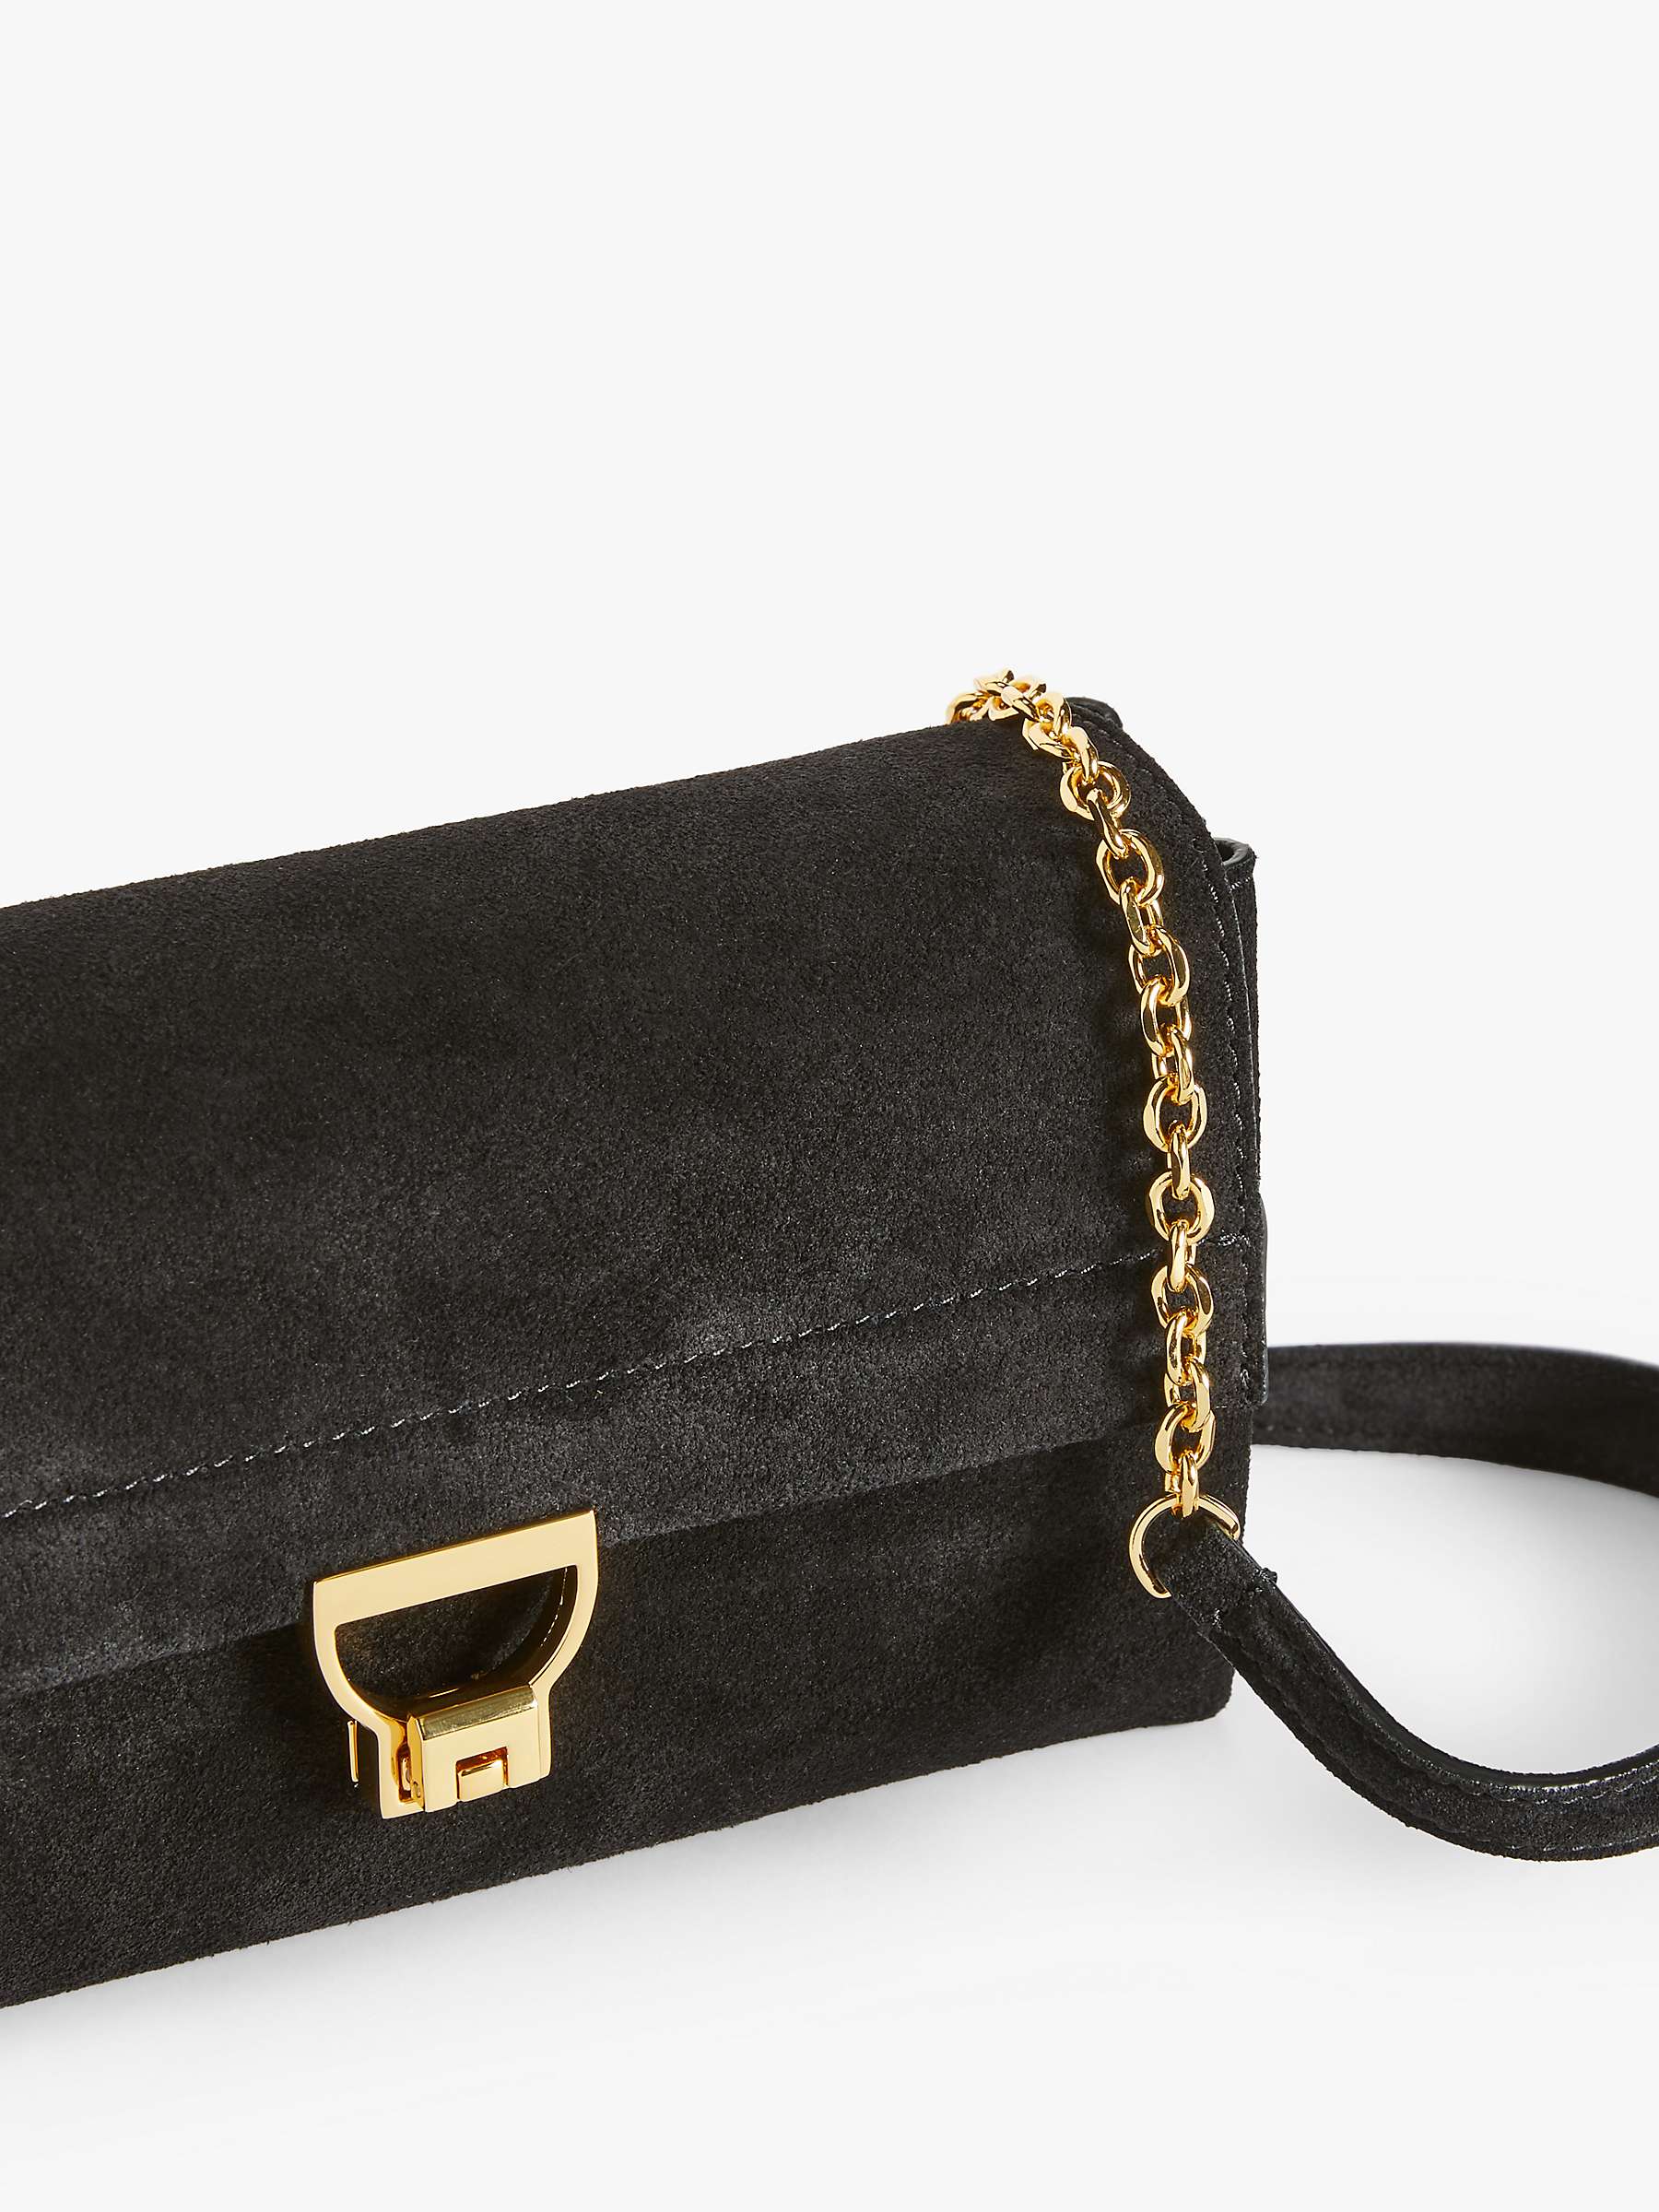 Buy Coccinelle Arlettis Suede Leather Clutch Bag, Noir Online at johnlewis.com